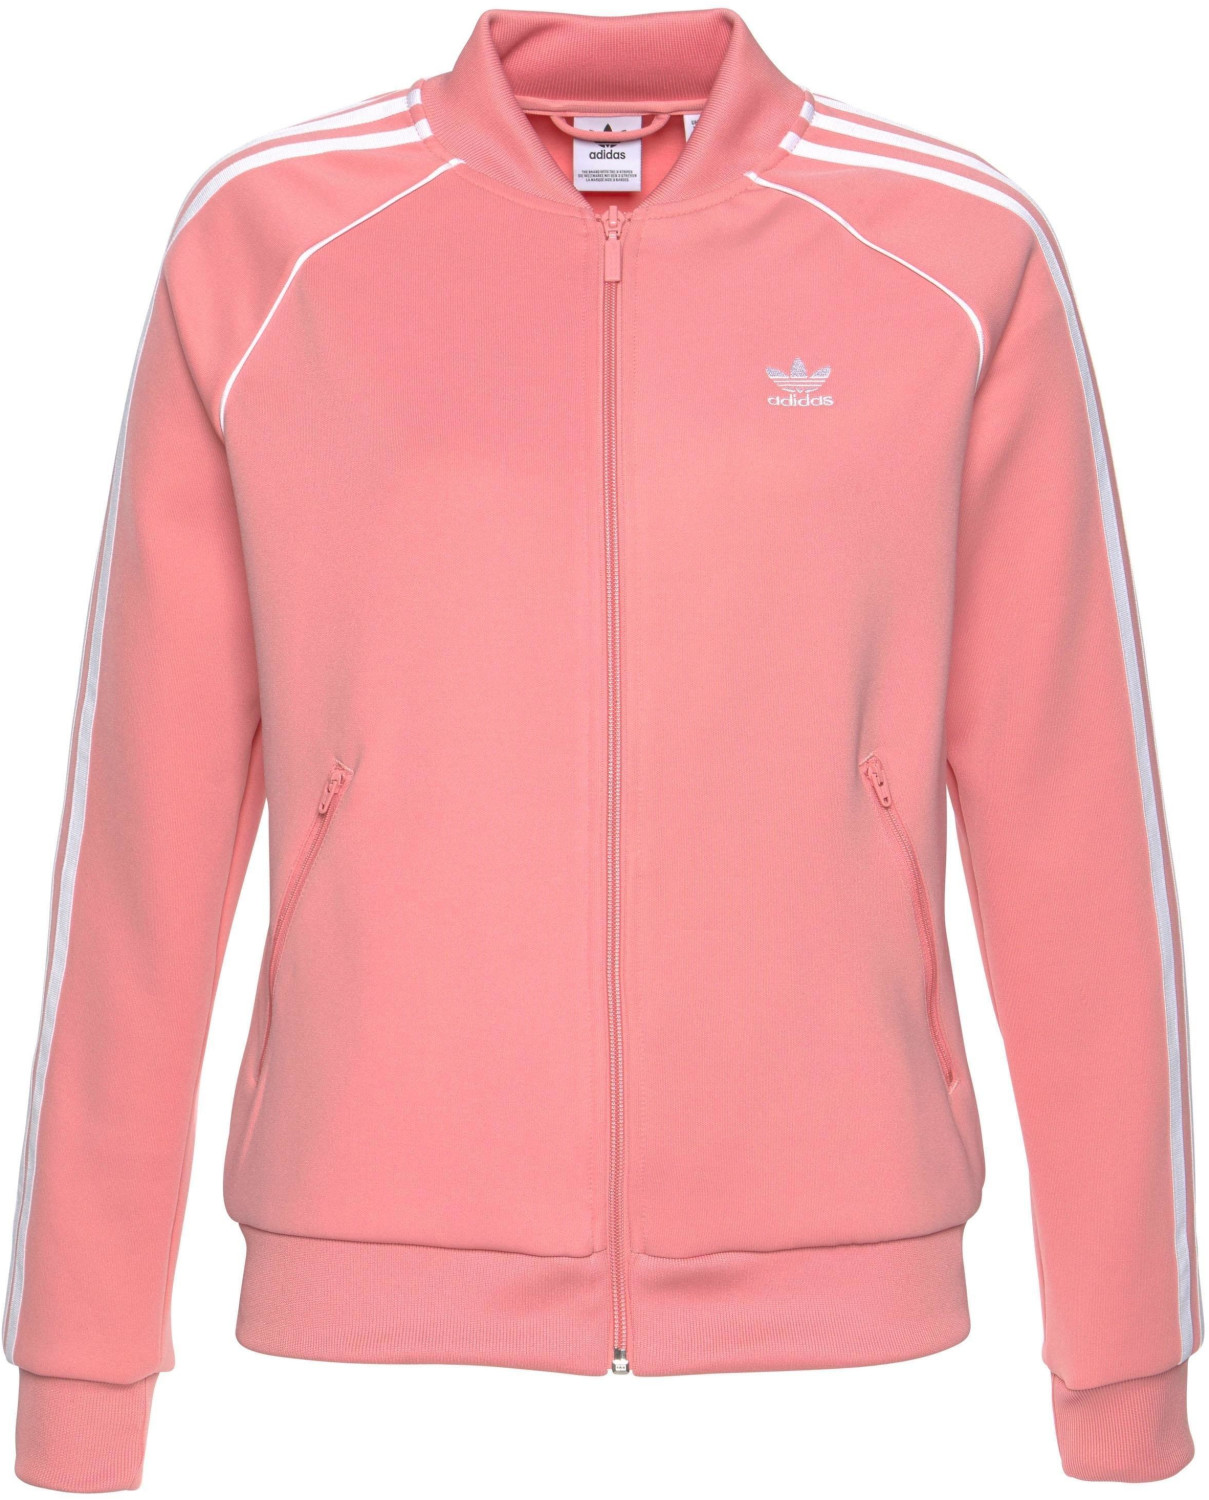 Adidas SST Originals Jacket